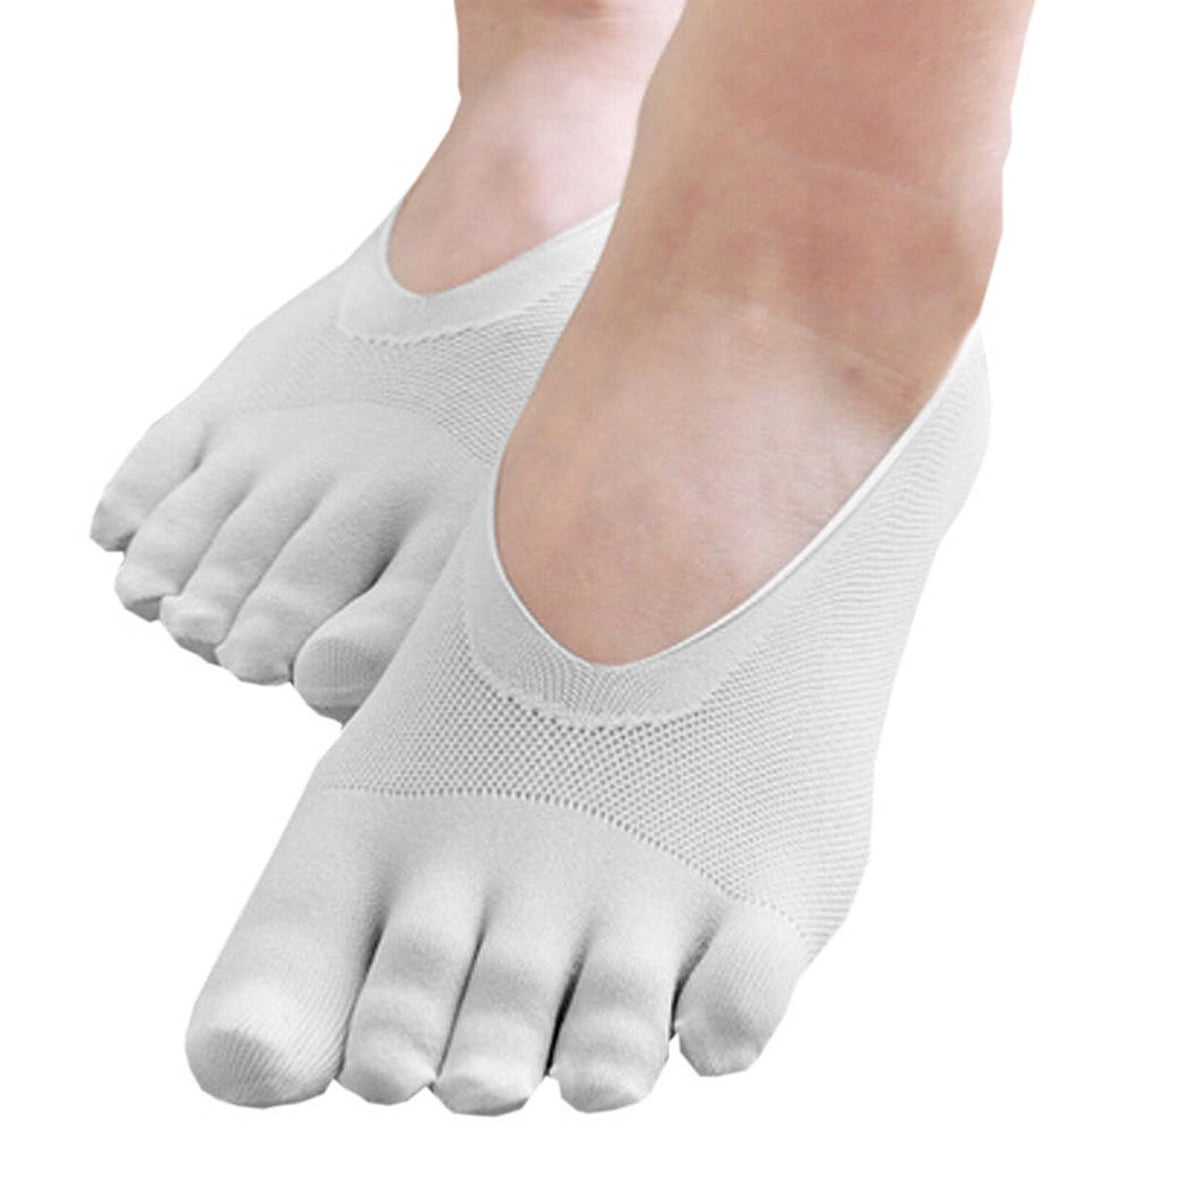 Comfortable Non-slip Corrective Toe Socks Women's High Heels Invisible So PH Jx